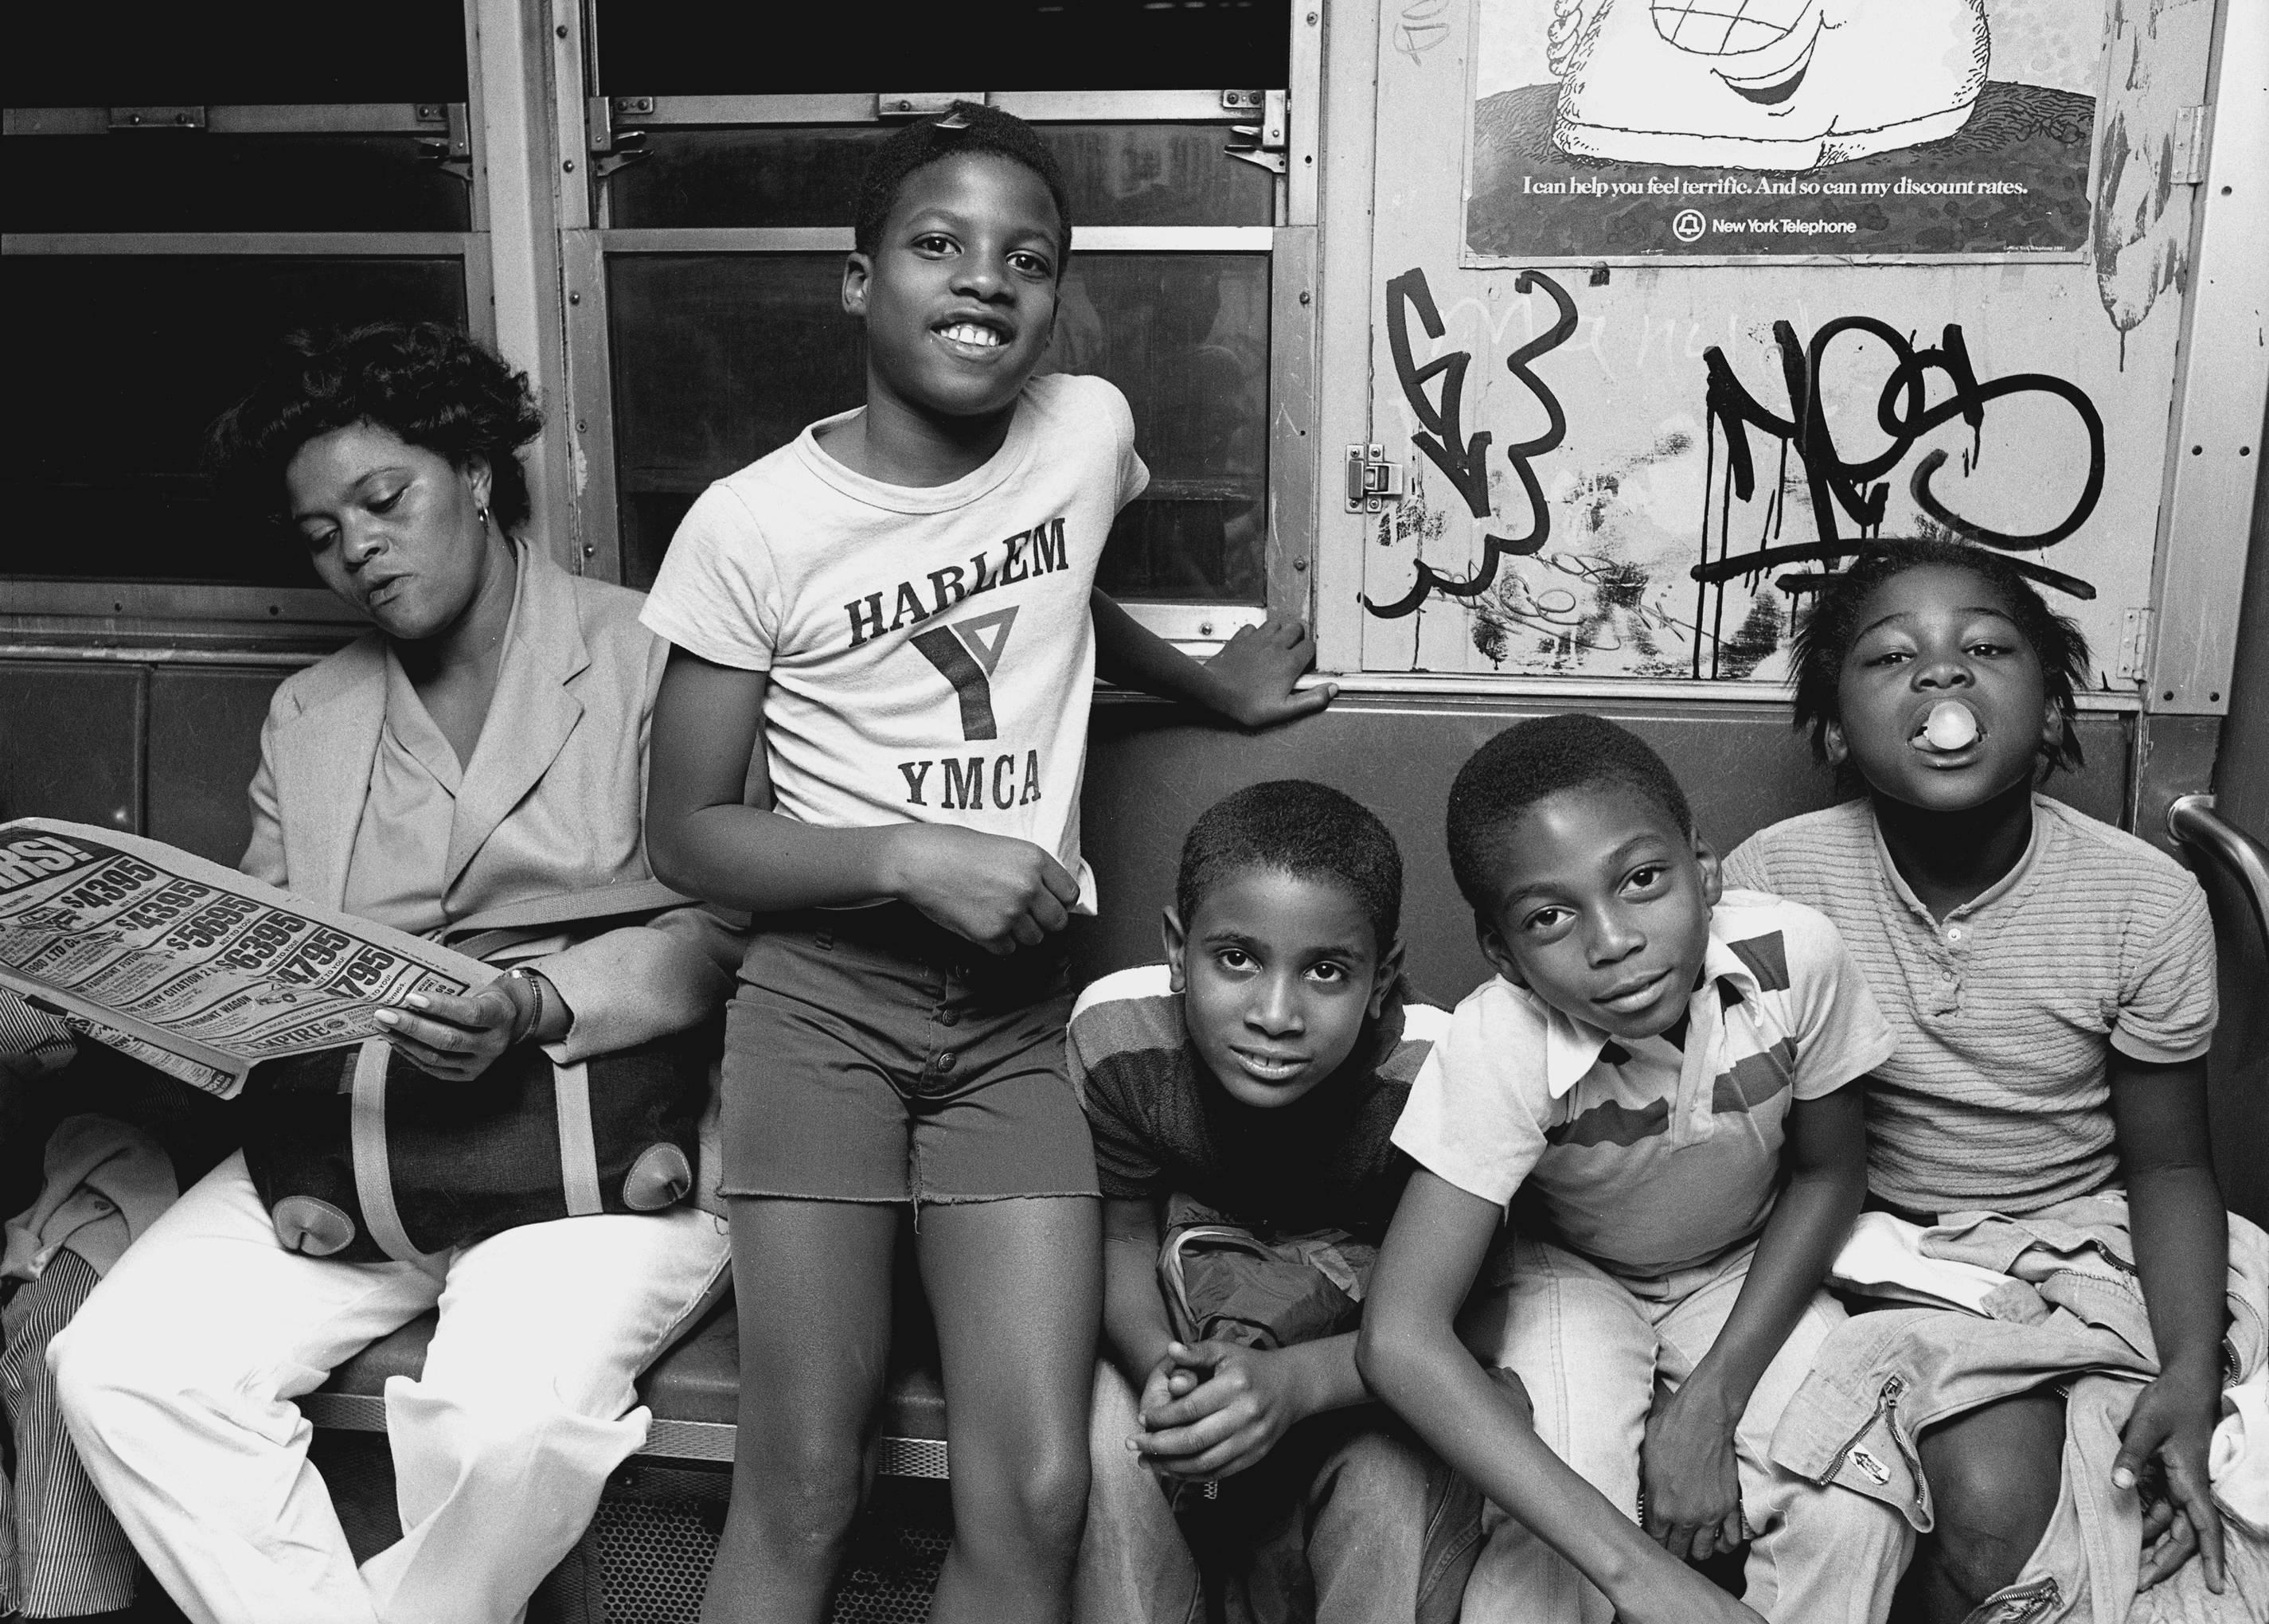 John Conn Black and White Photograph - Subway 30, Kids, 1980s, NYC, Black & White Photograph, Subway, Limited Ed.